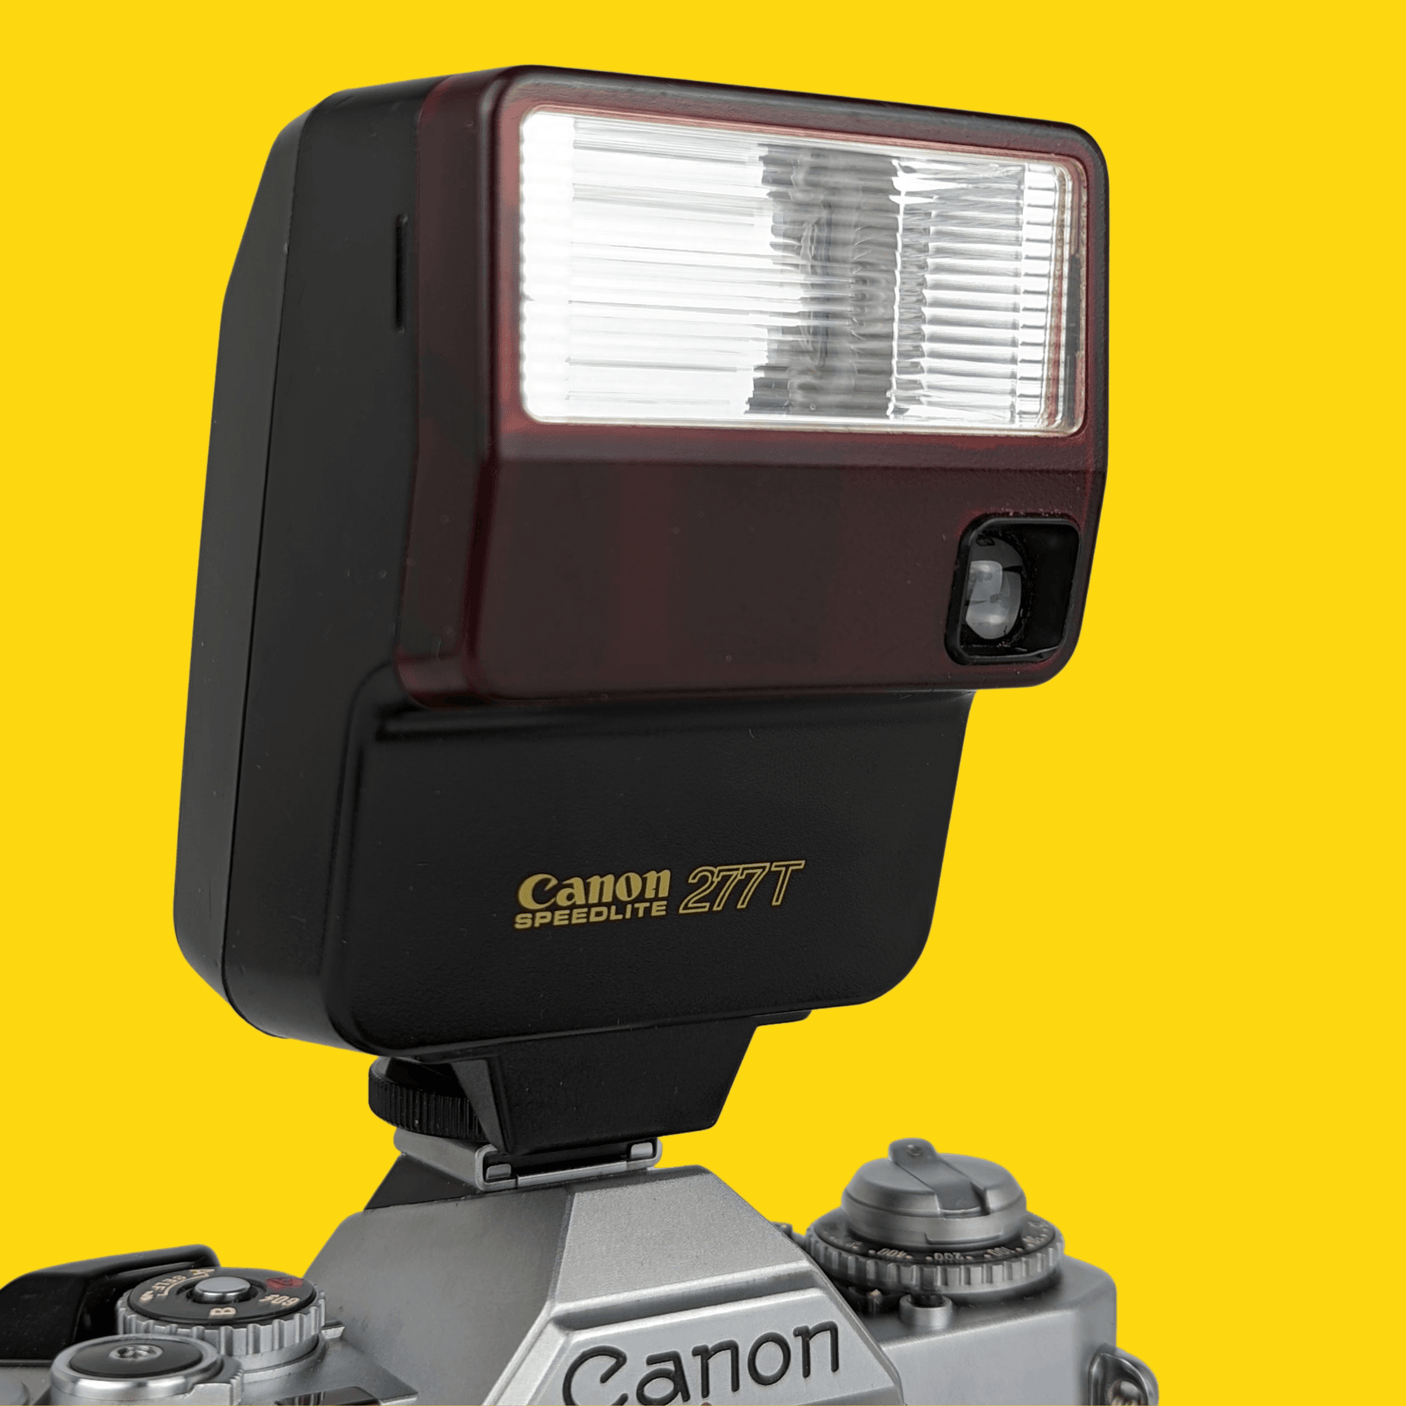 Canon Speedlite 277T External Flash Unit for 35mm Film Camera